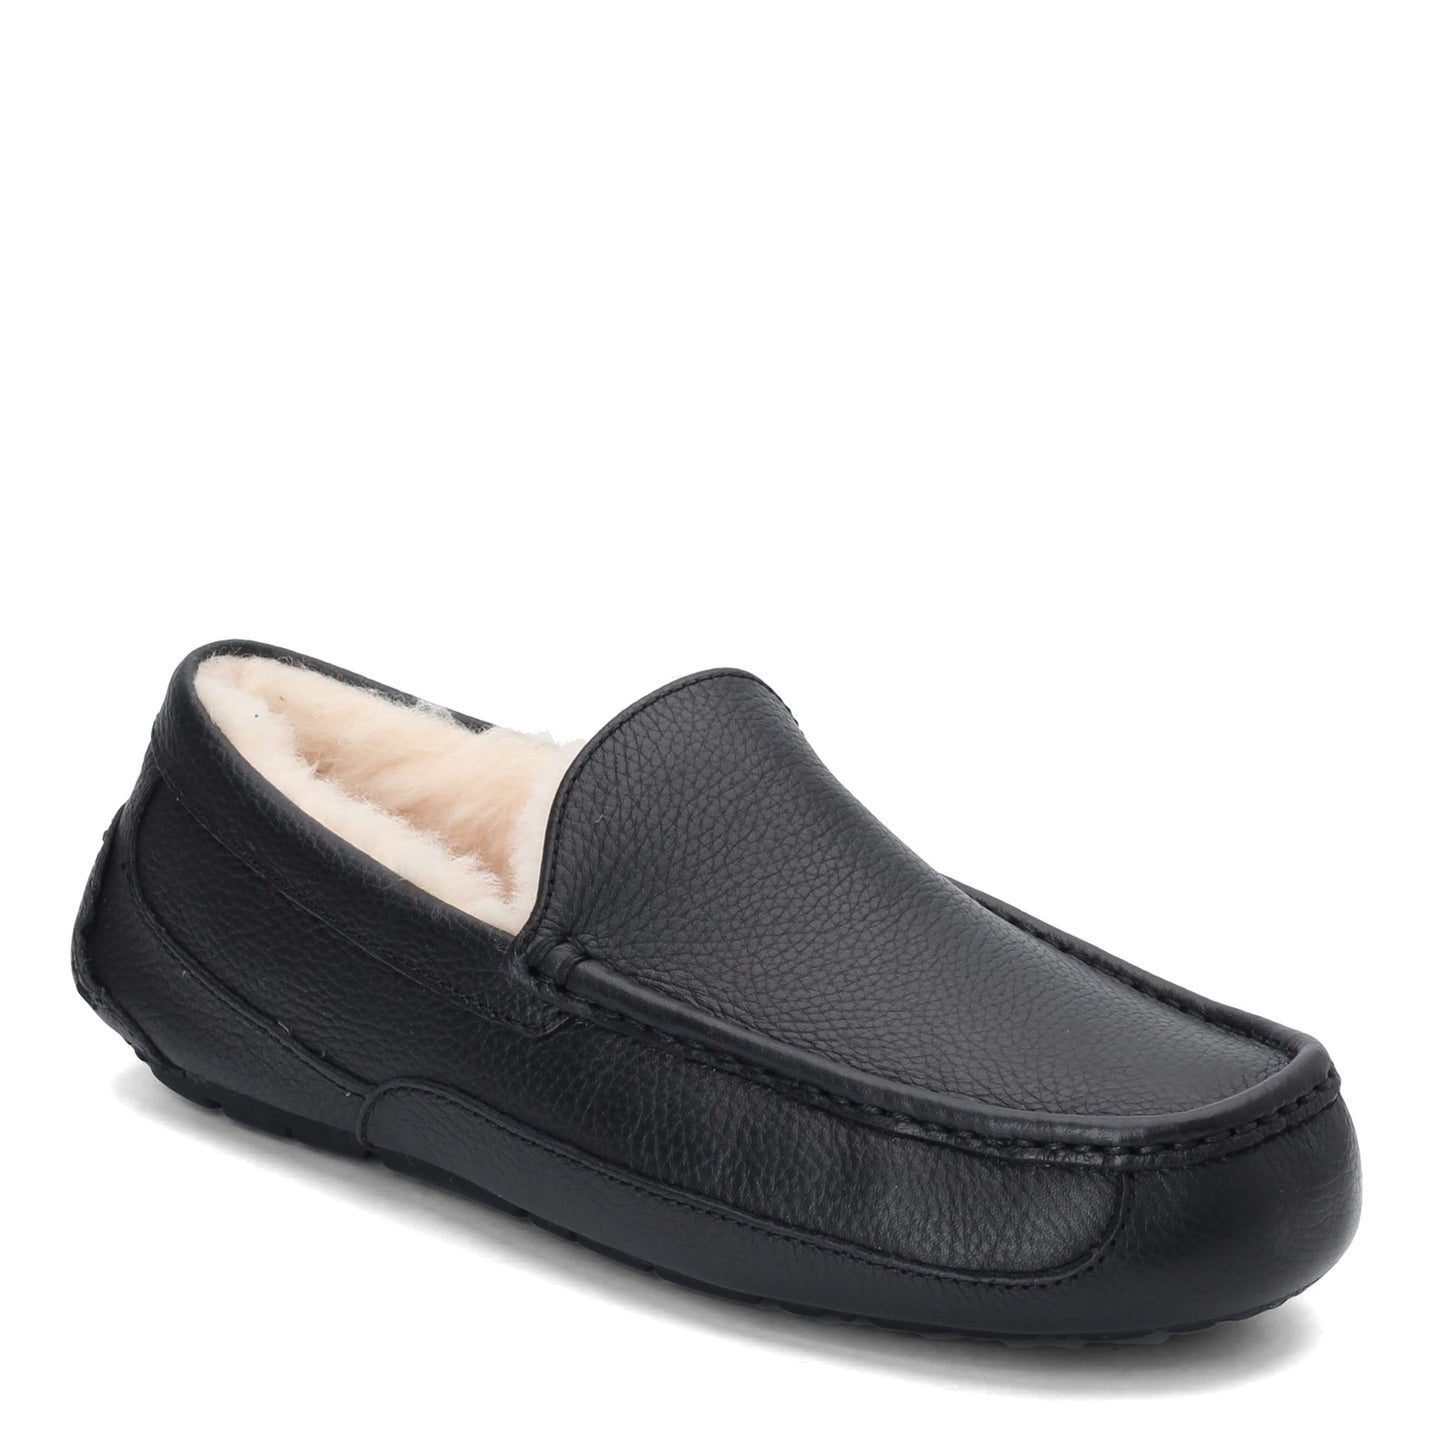 Peltz Shoes  Men's Ugg Ascot Slipper Black Leather 5379B-BLK